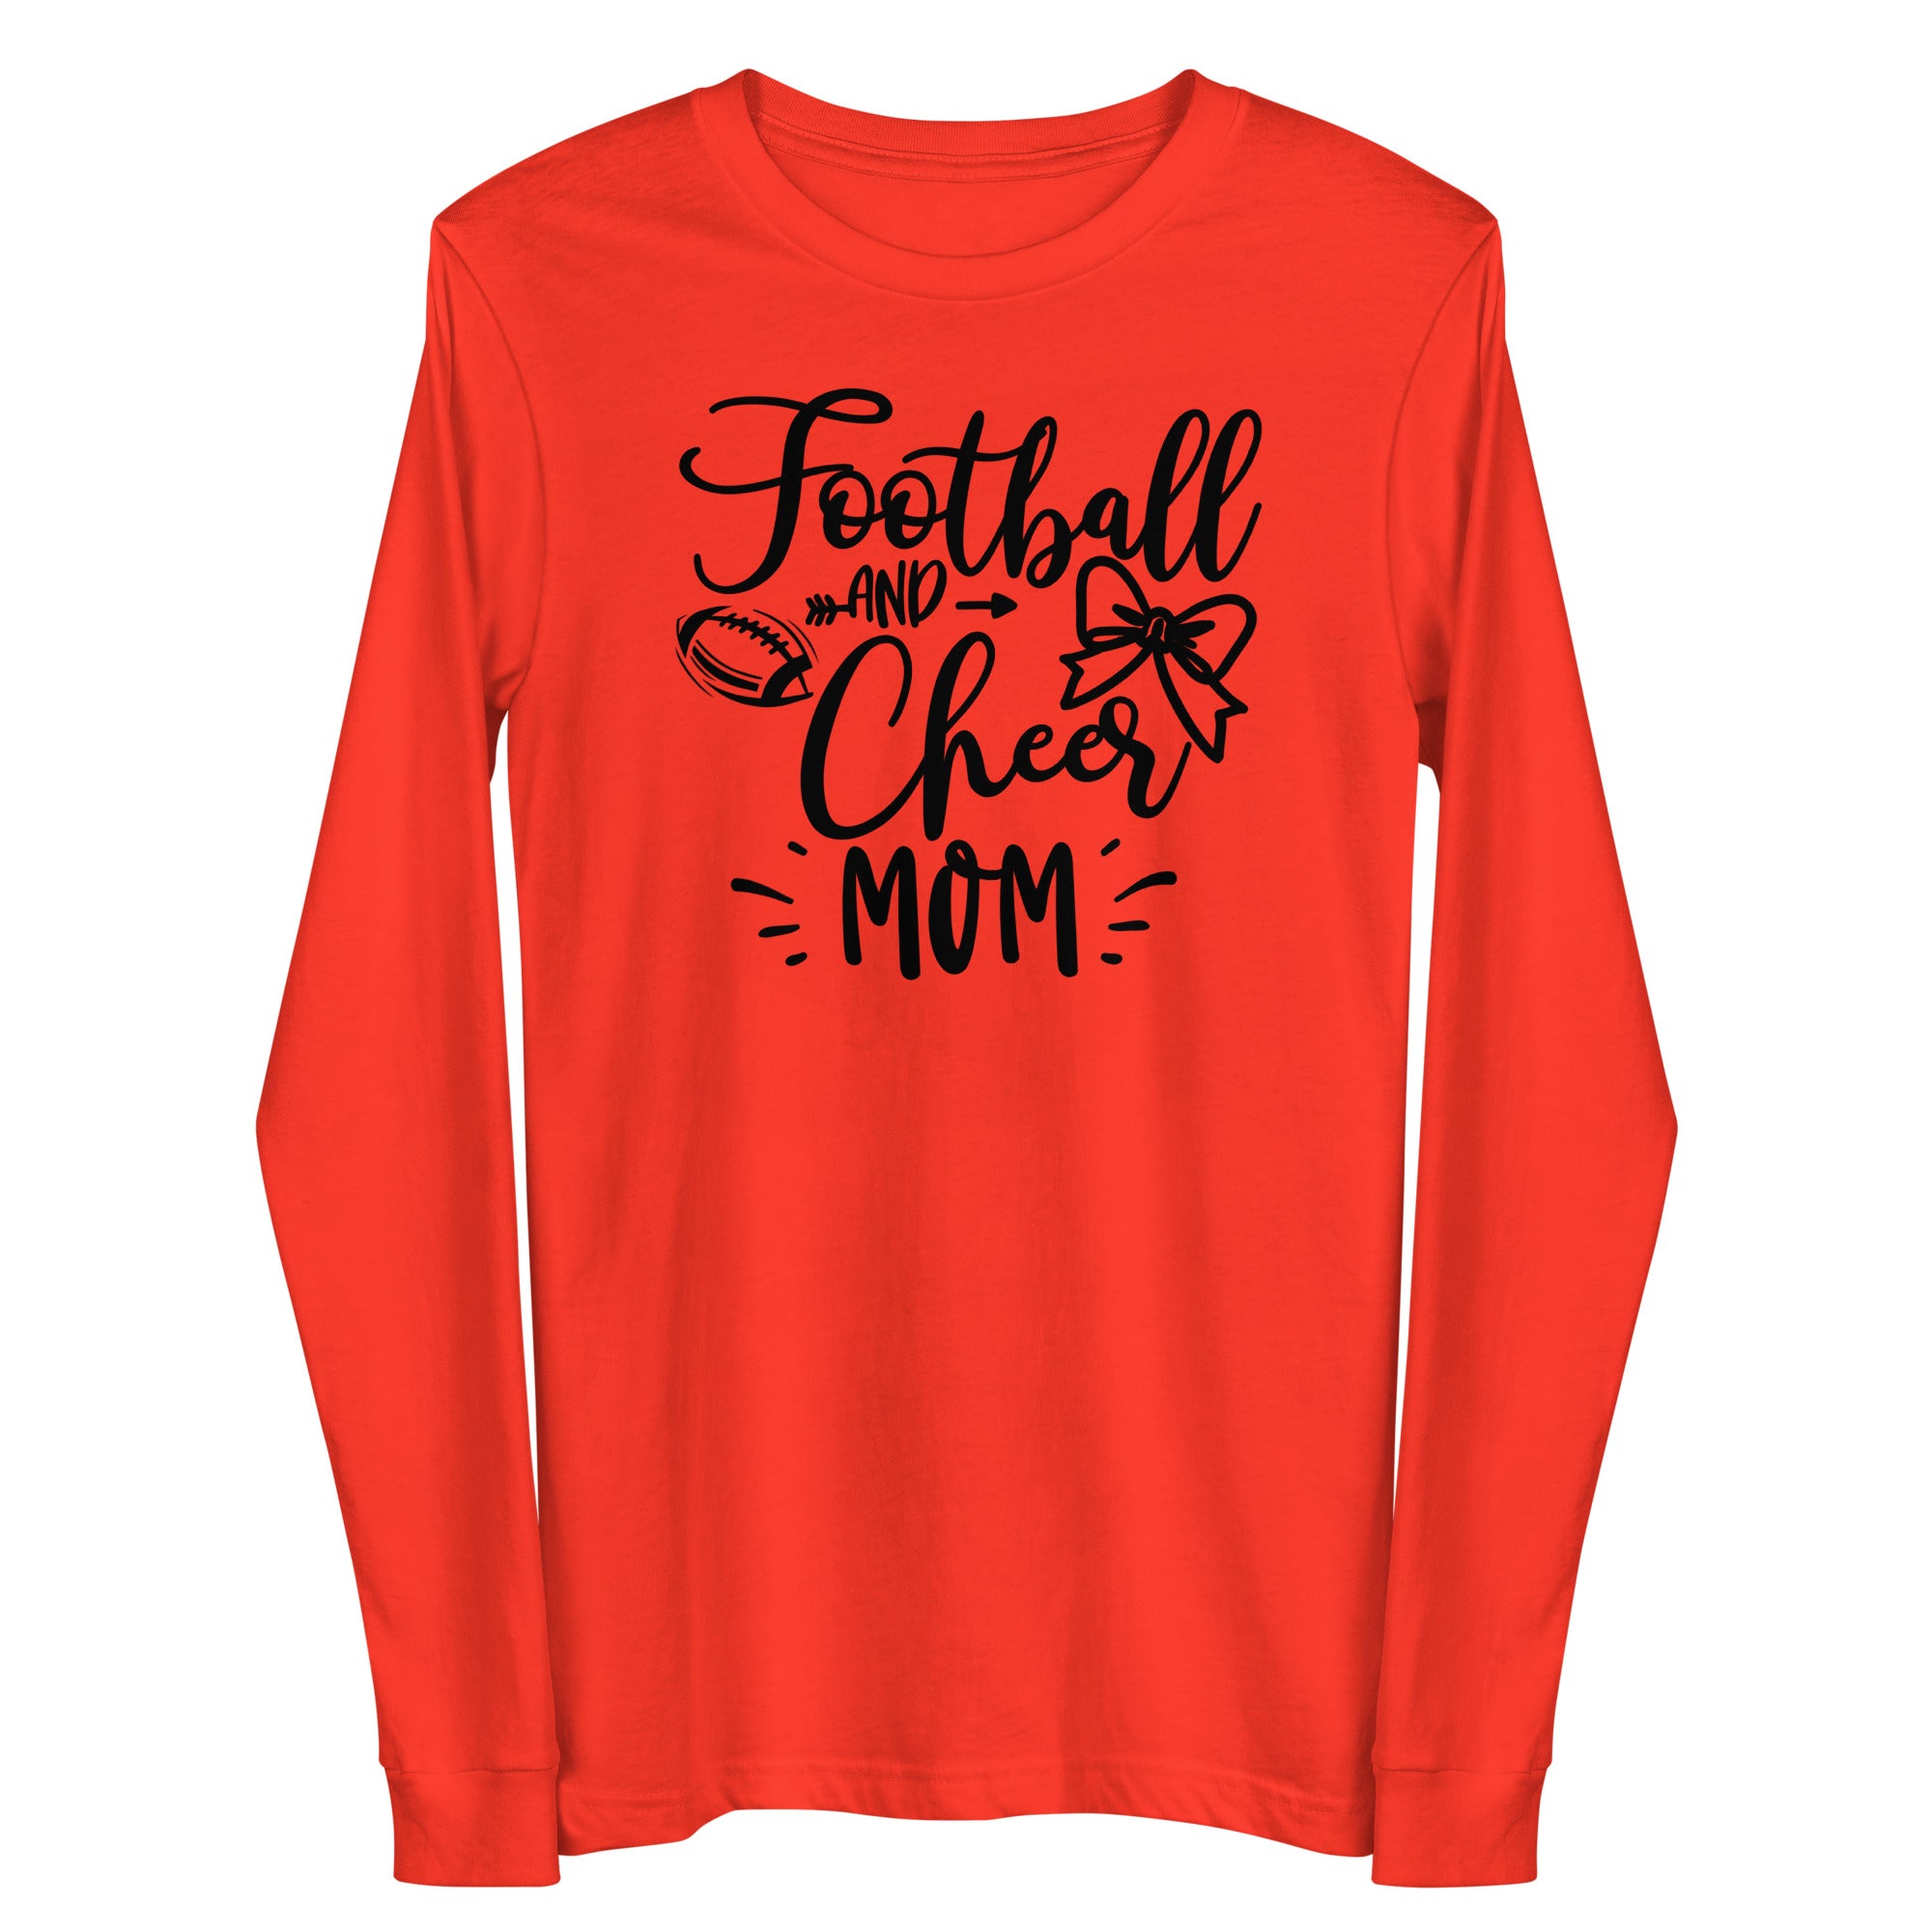 Football and Cheer Mom Long Sleeve Shirt on Bella Canvas